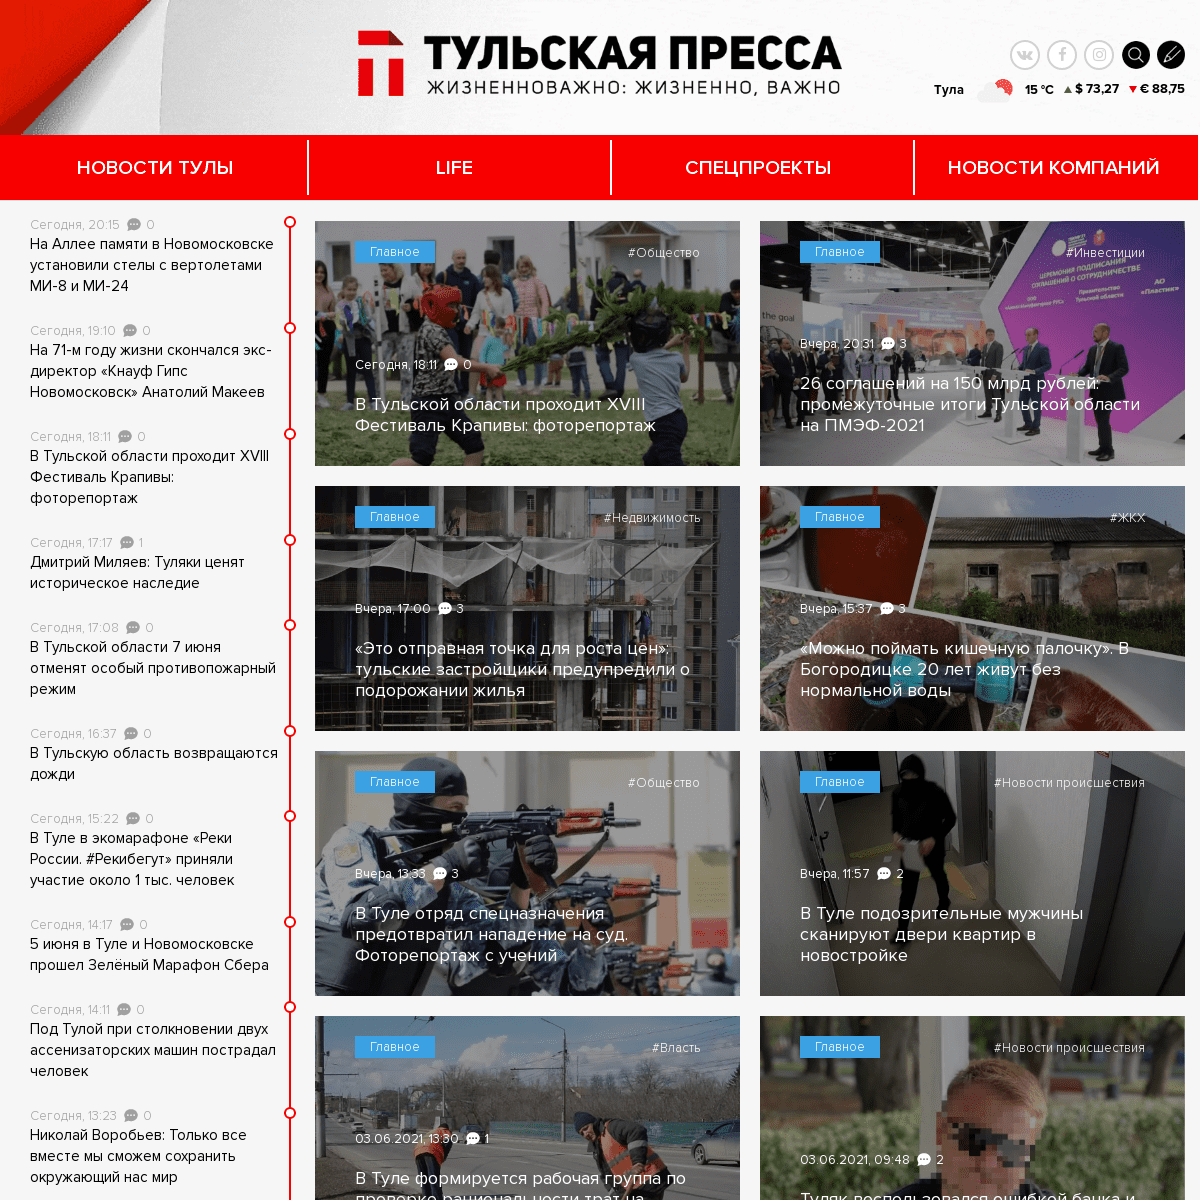 A complete backup of https://tulapressa.ru